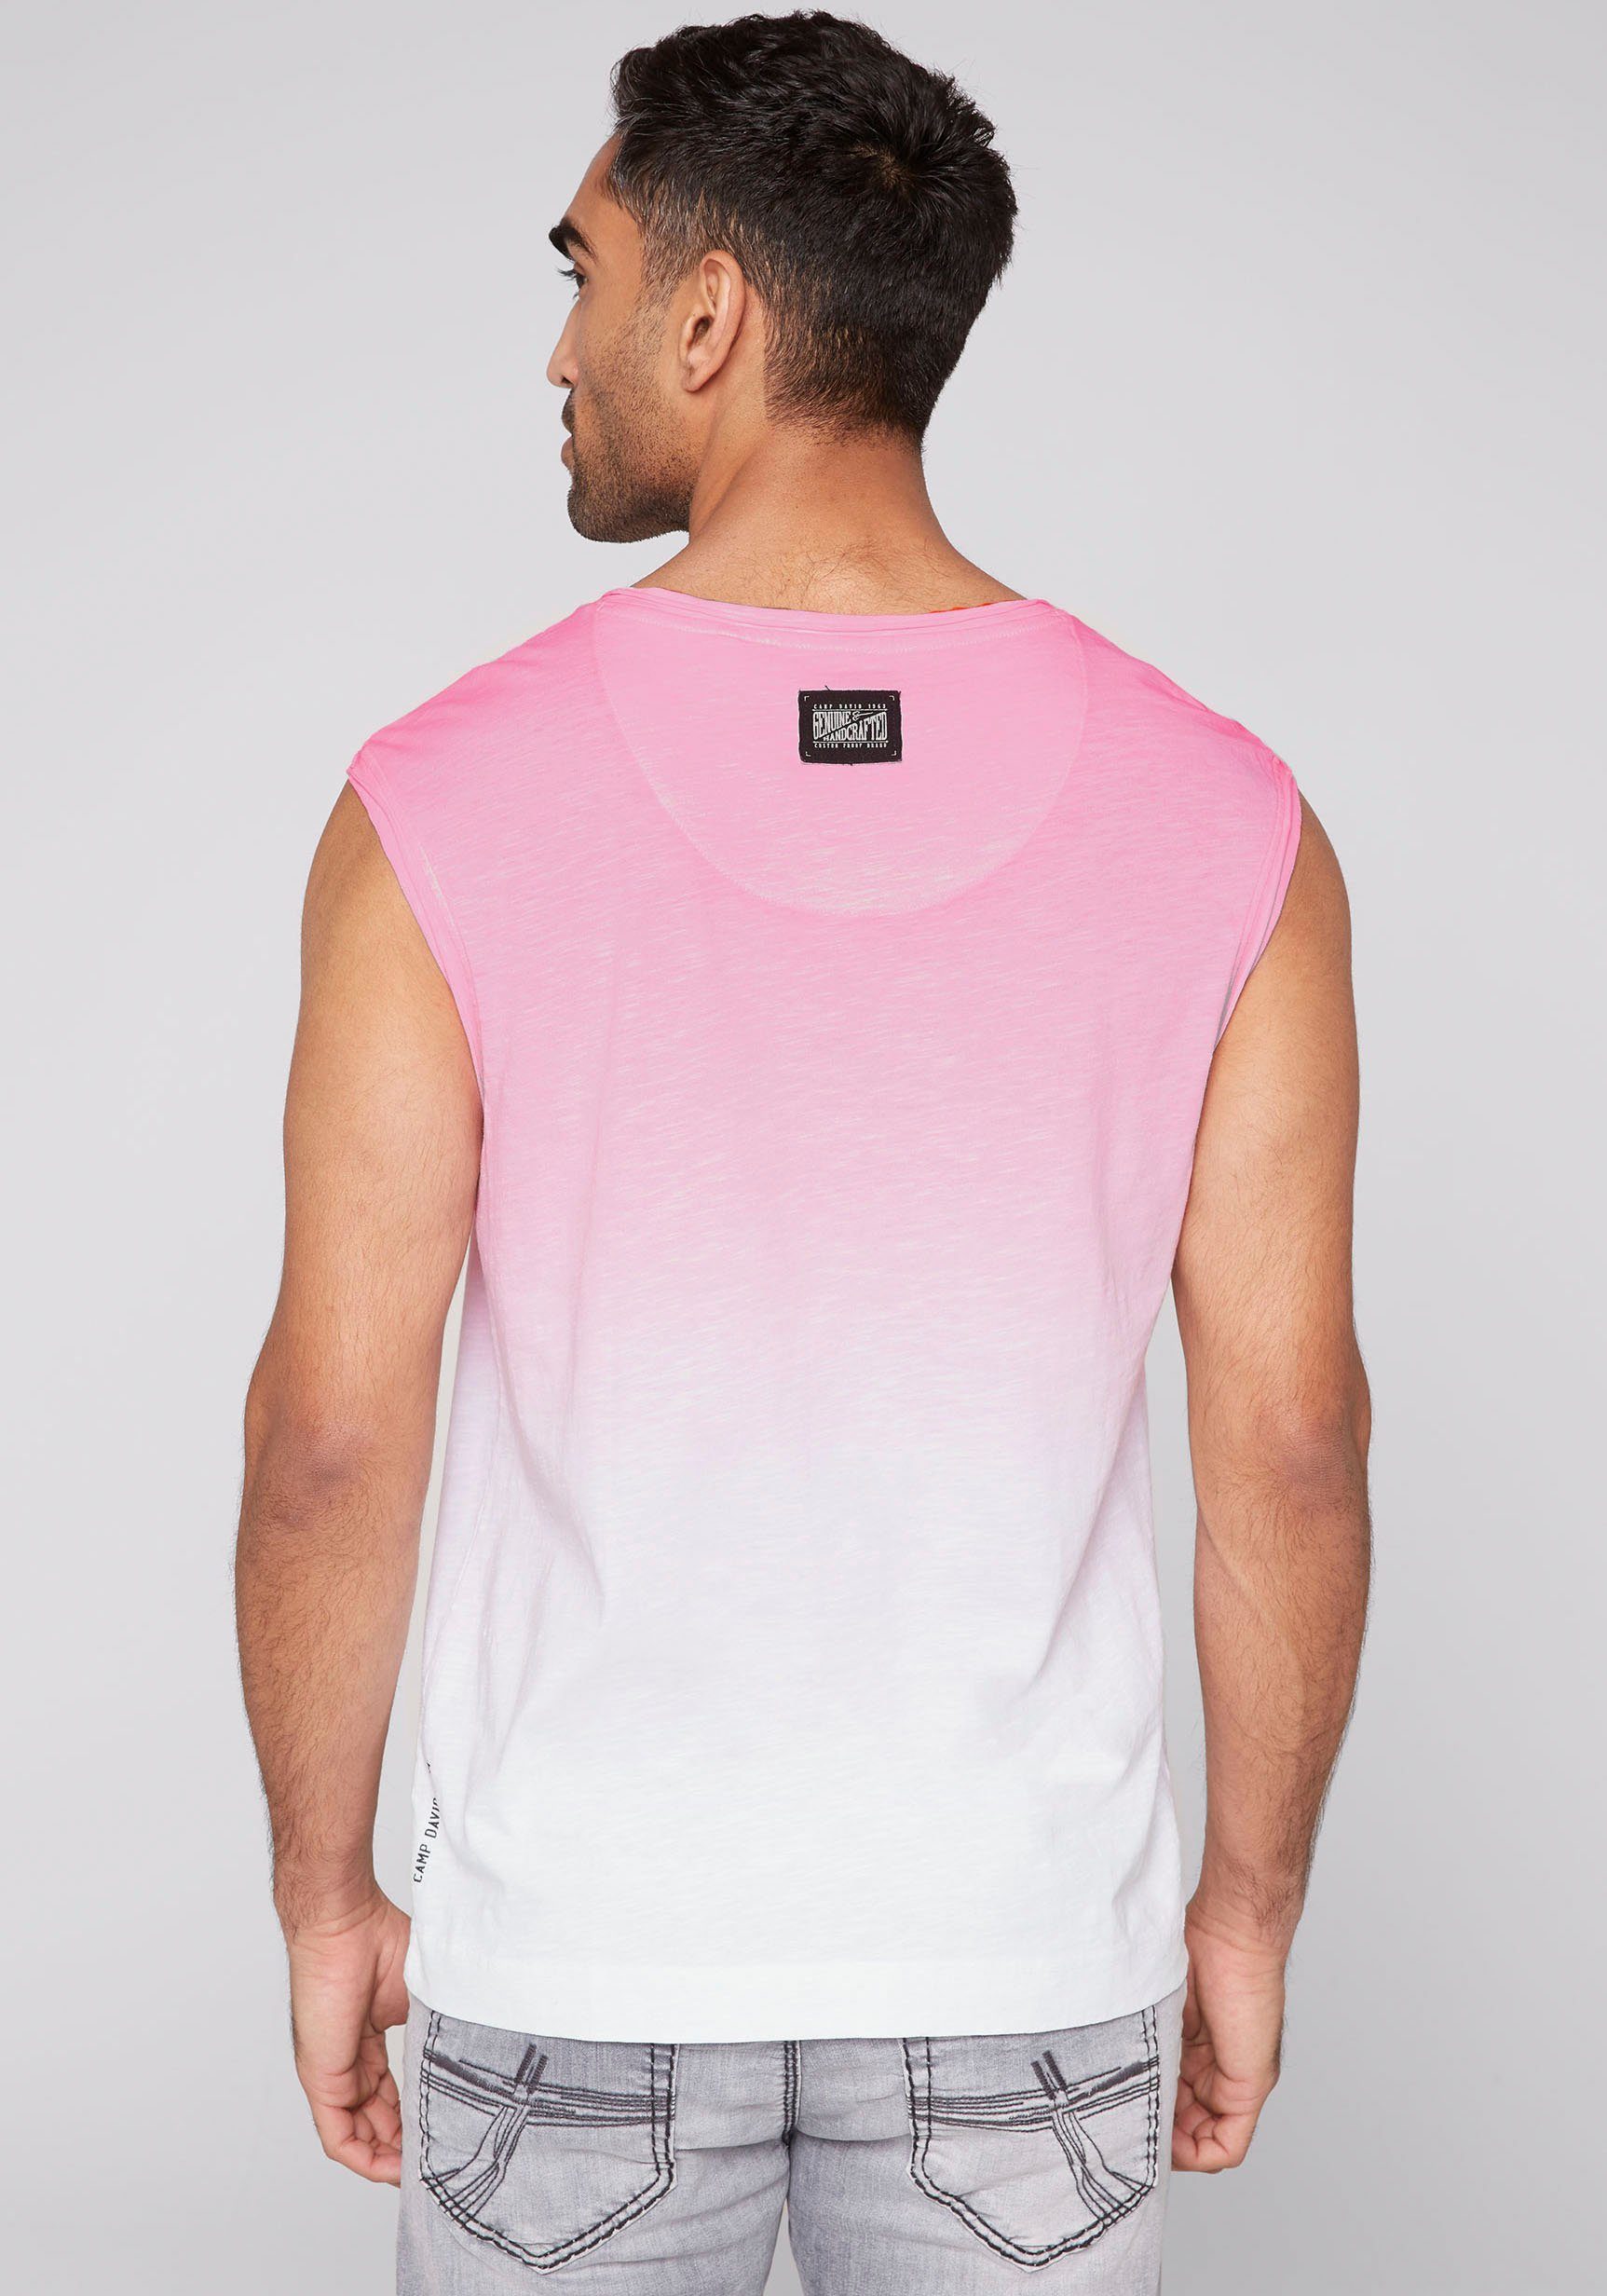 pink V-Shirt / CAMP neon DAVID opticwhite